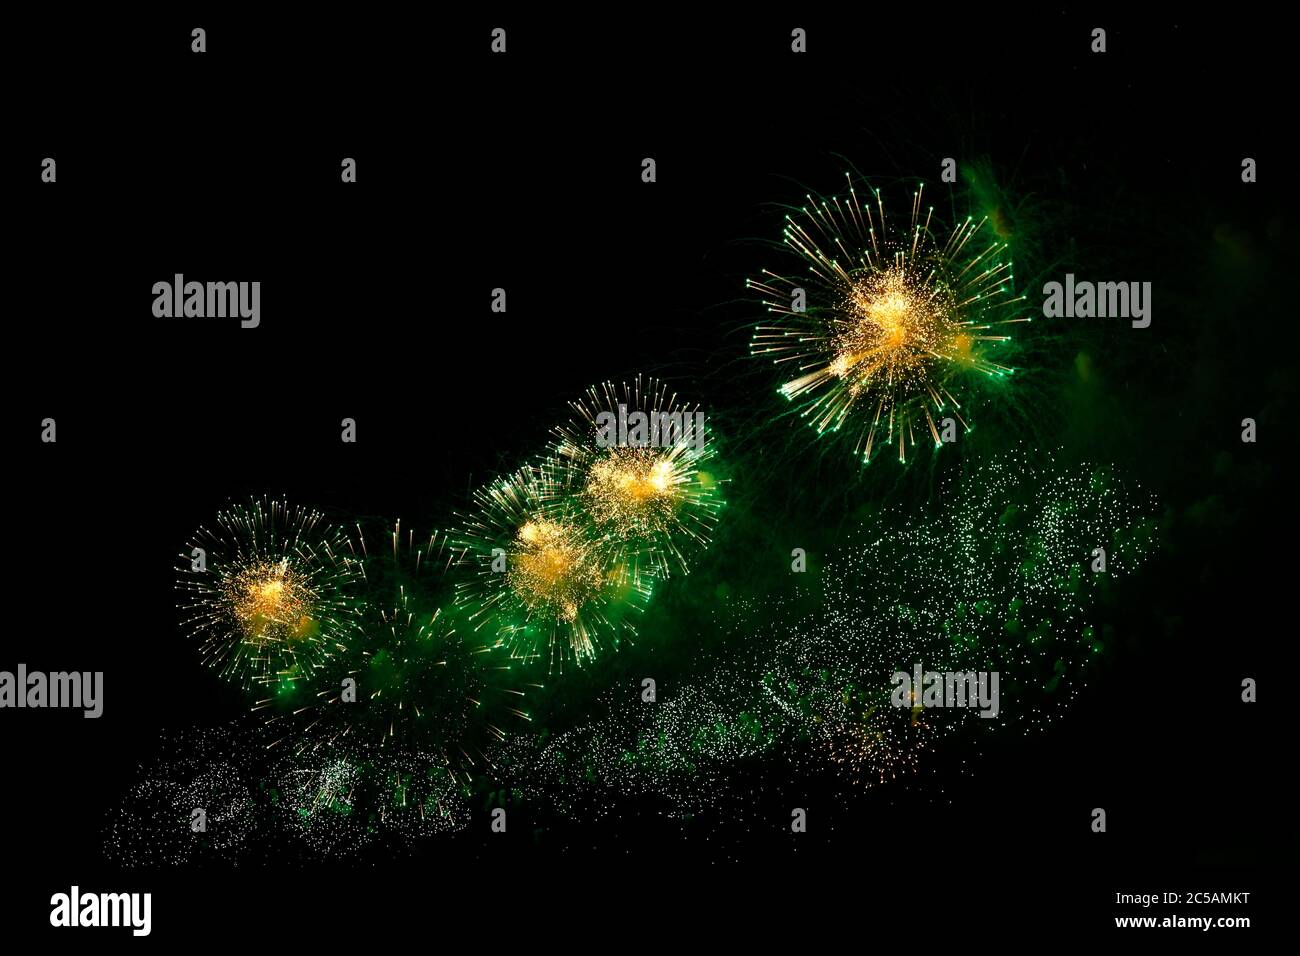 An image of beautiful fireworks celebration Stock Photo